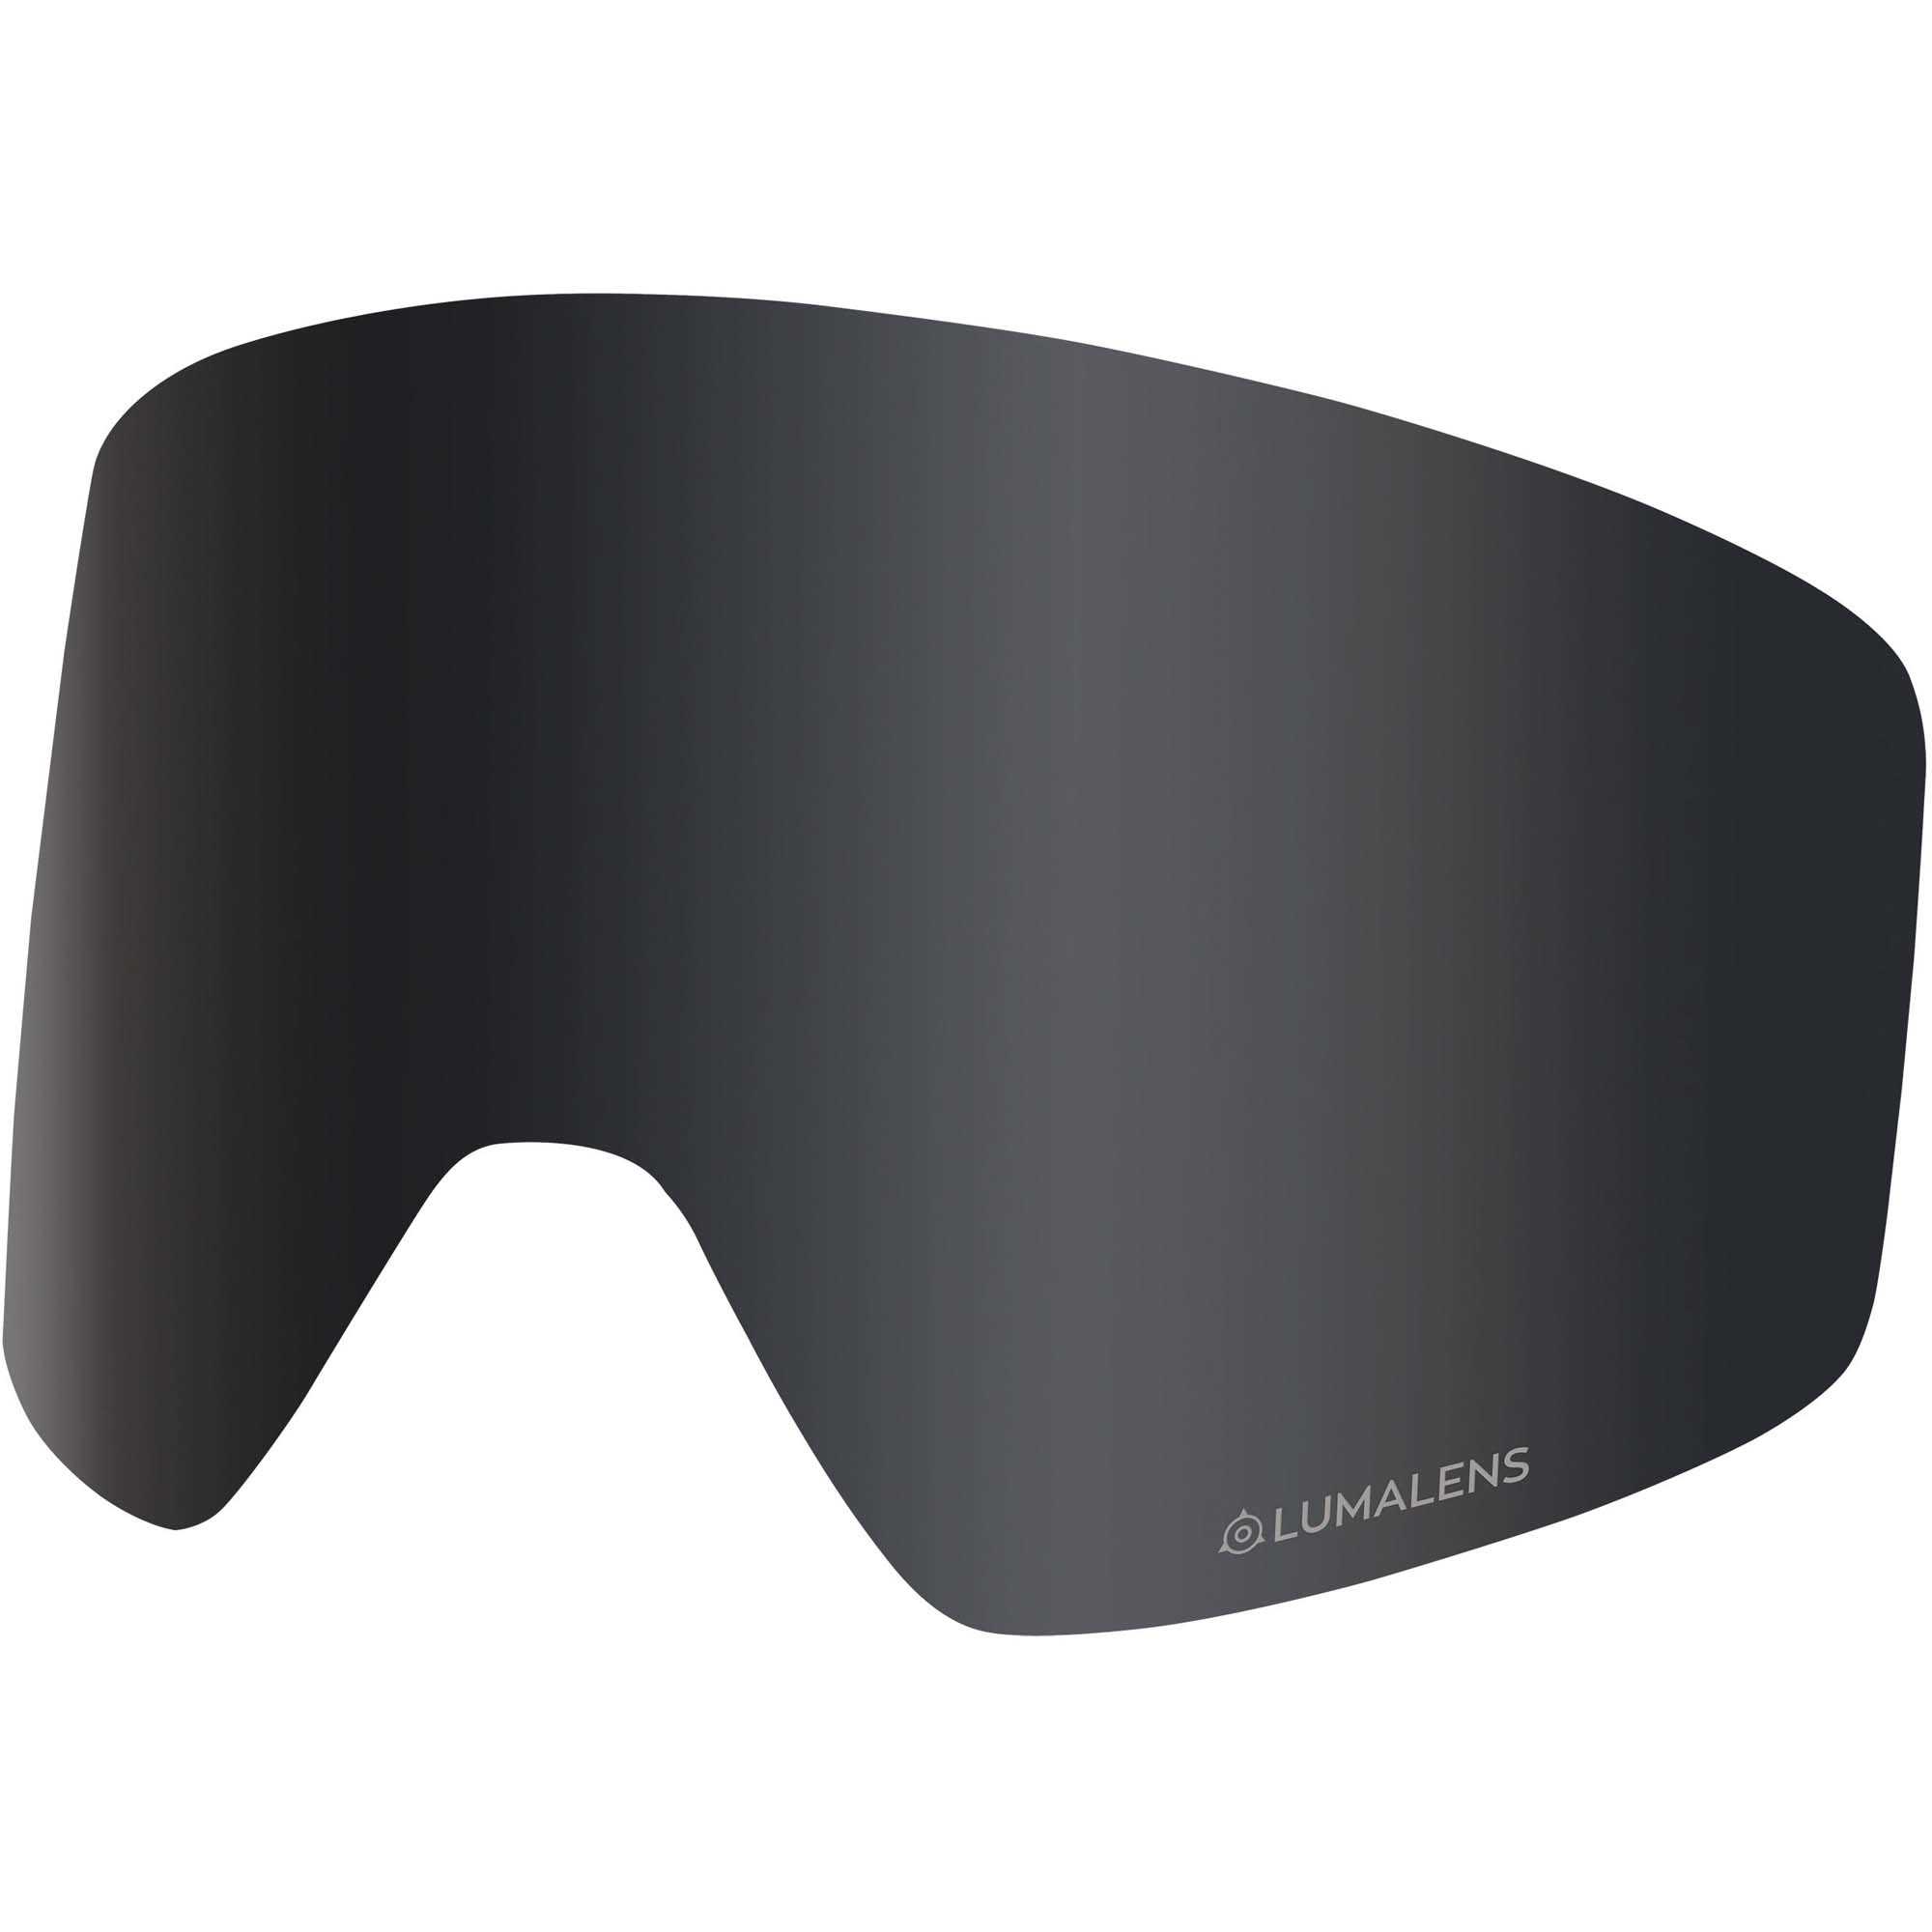 Dragon PXV Snowboard/Ski Goggles Spare Lens